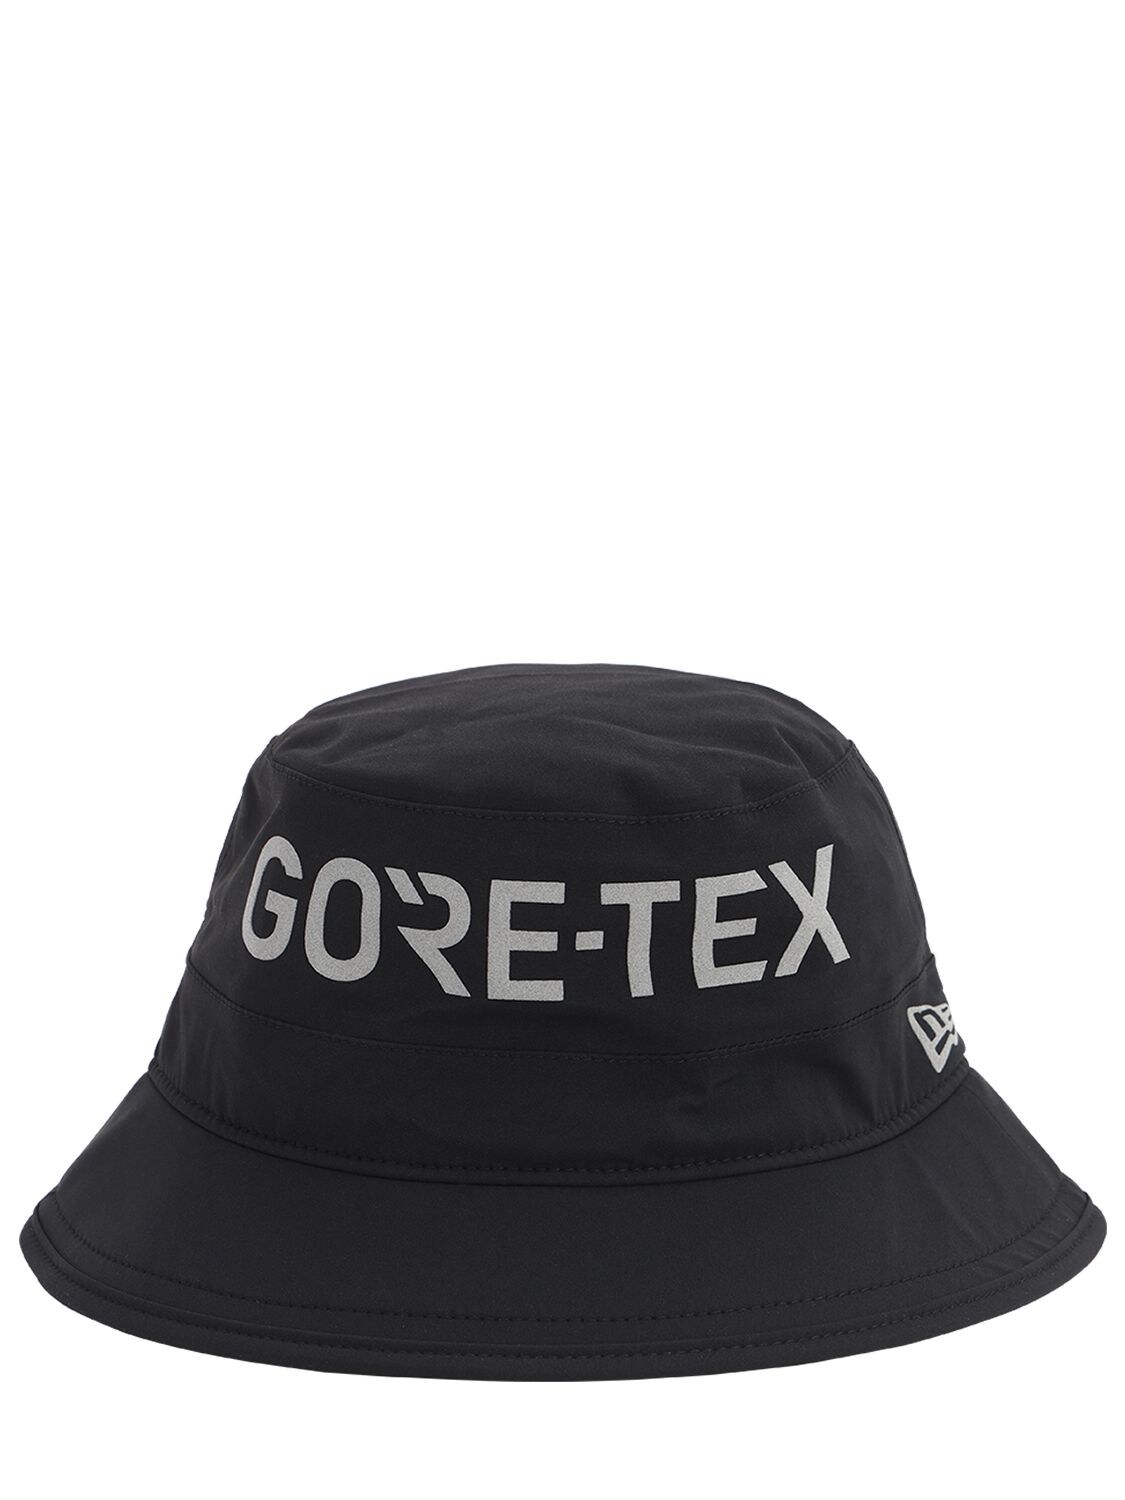 New Era Gore-tex Reflective Bucket Hat In Black